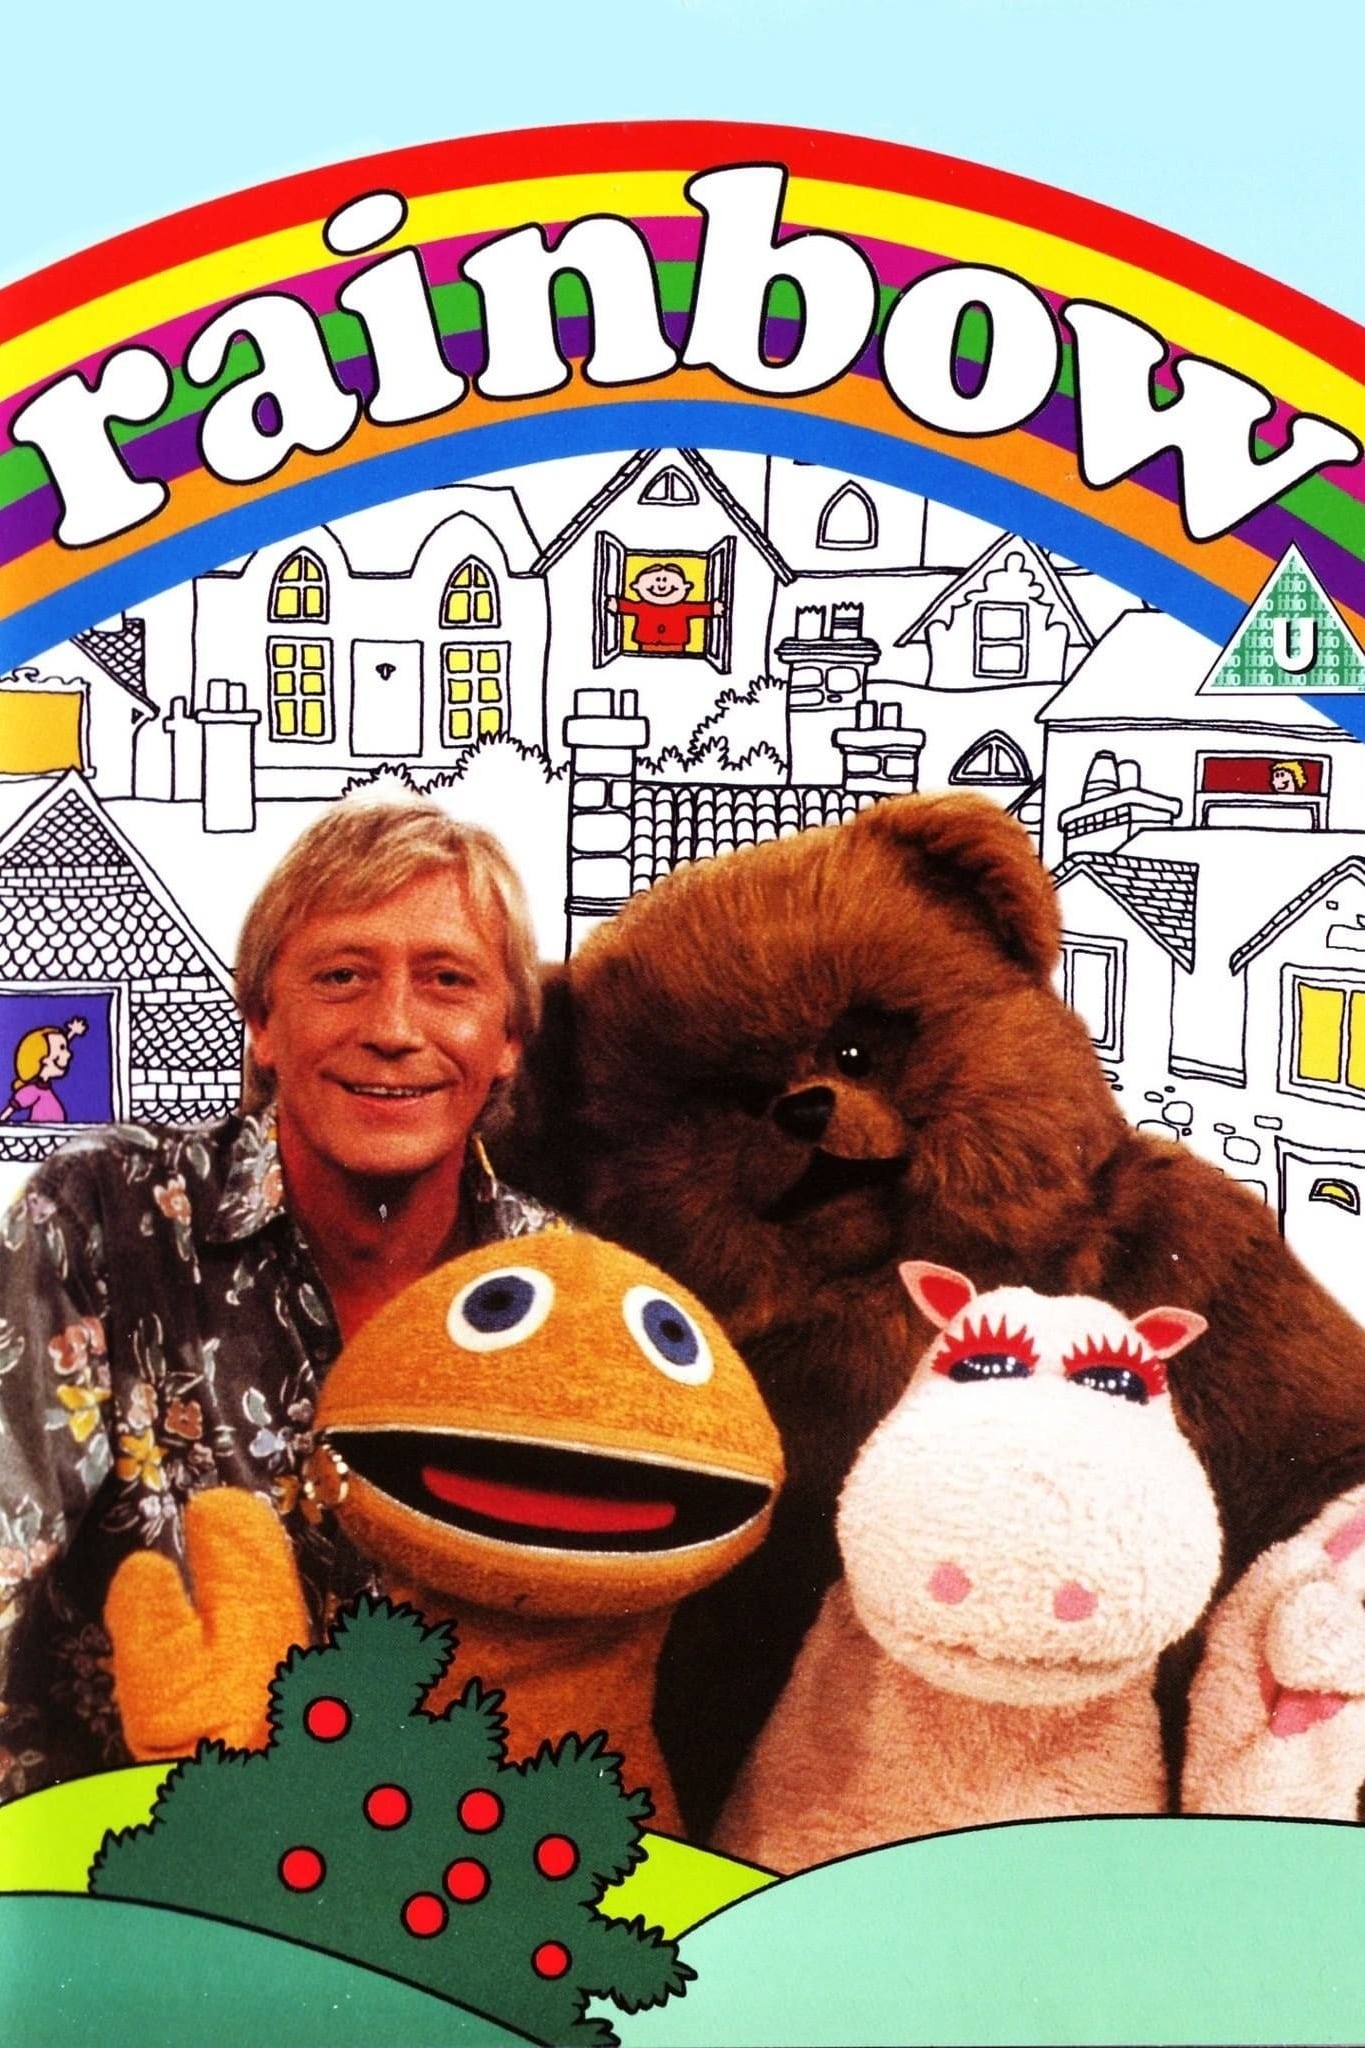 Rainbow (1972)